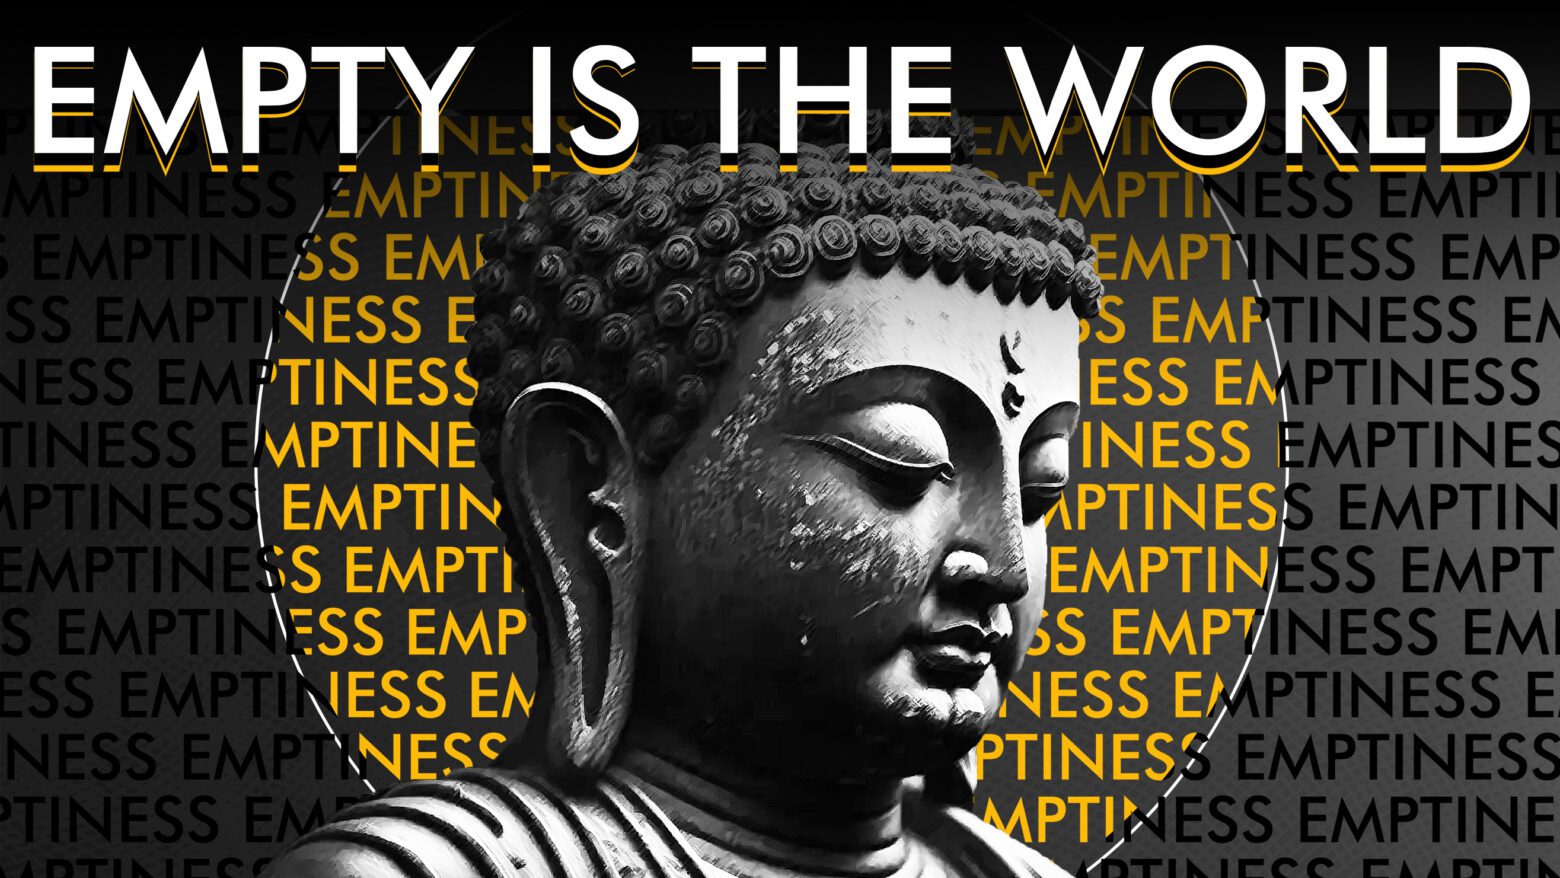 Buddhist Emptiness Explained